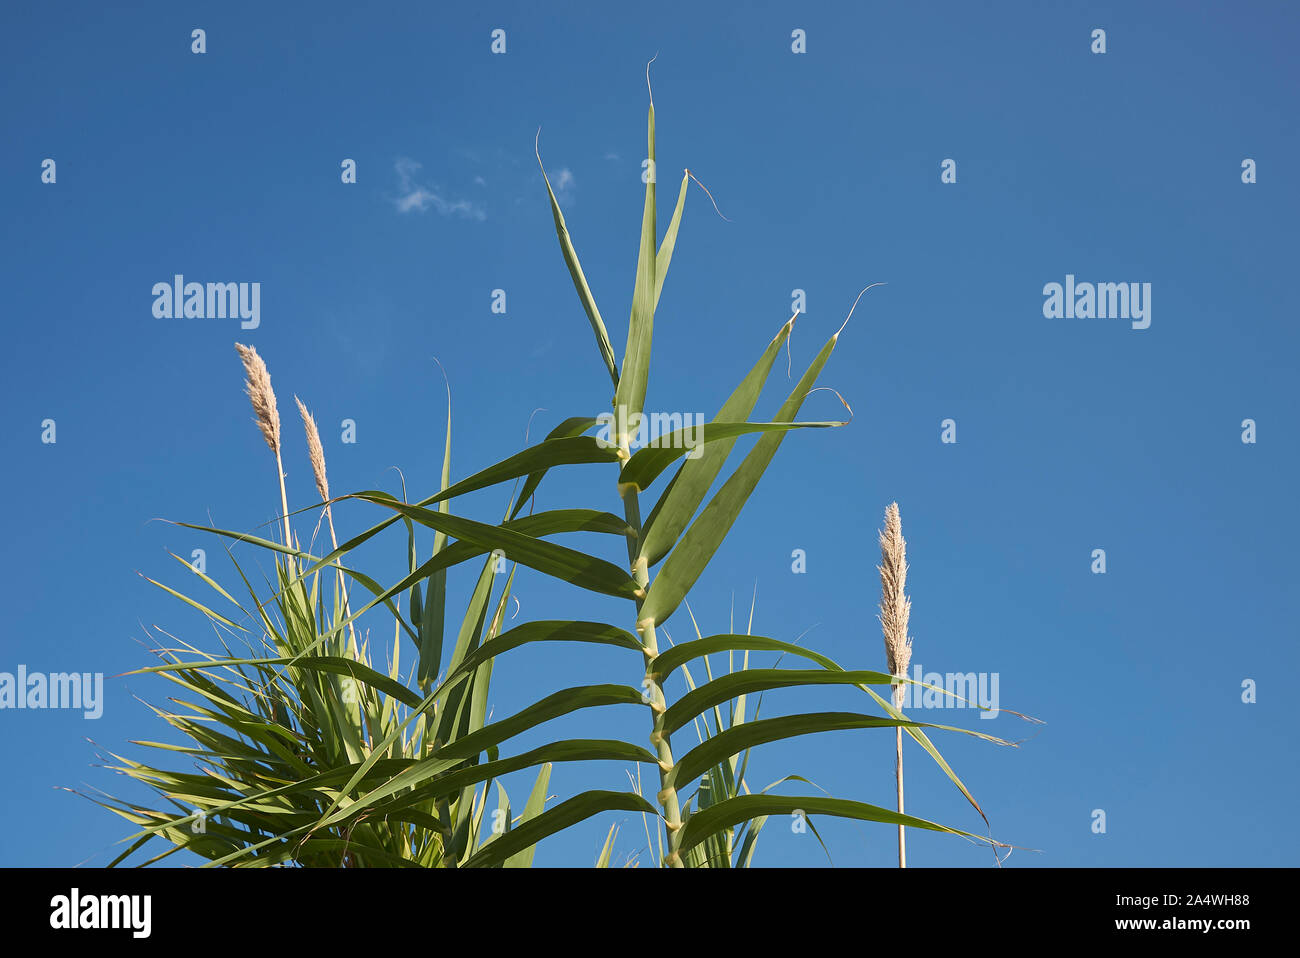 Arundo donax plants with inflorescence Stock Photo